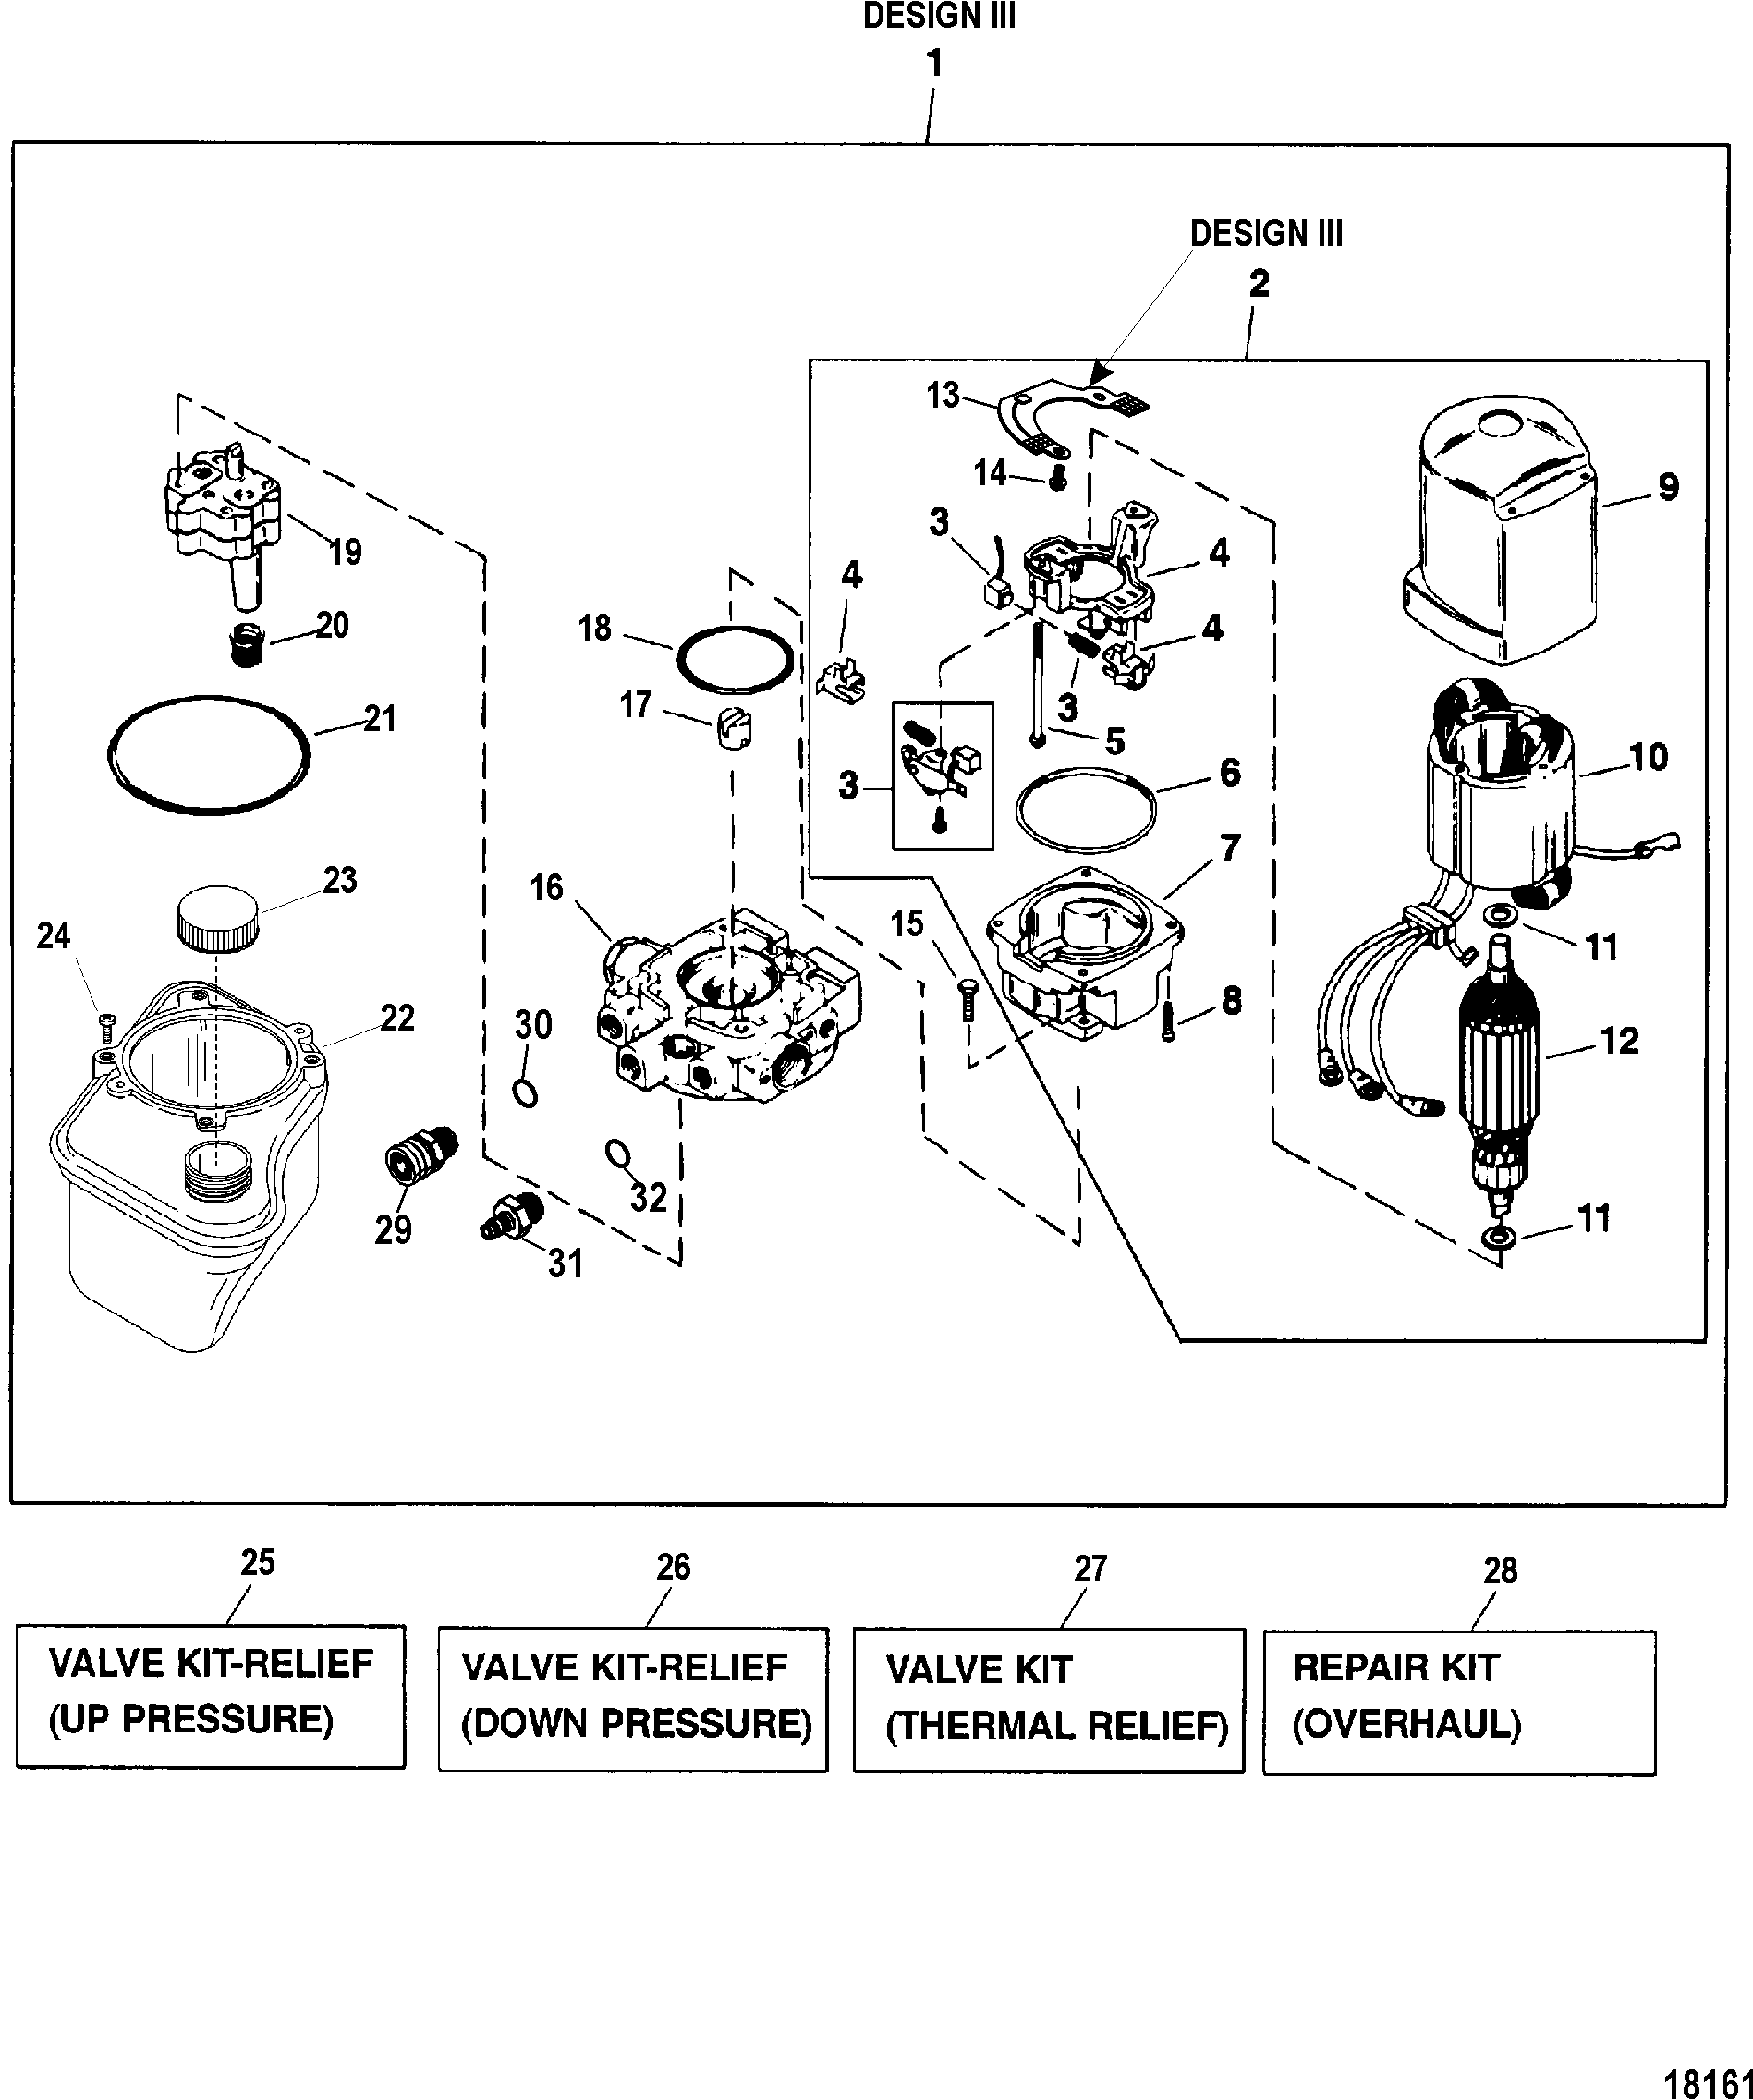 Pump/Motor(Top Mount Reservoir) (Design III - 14336A31)